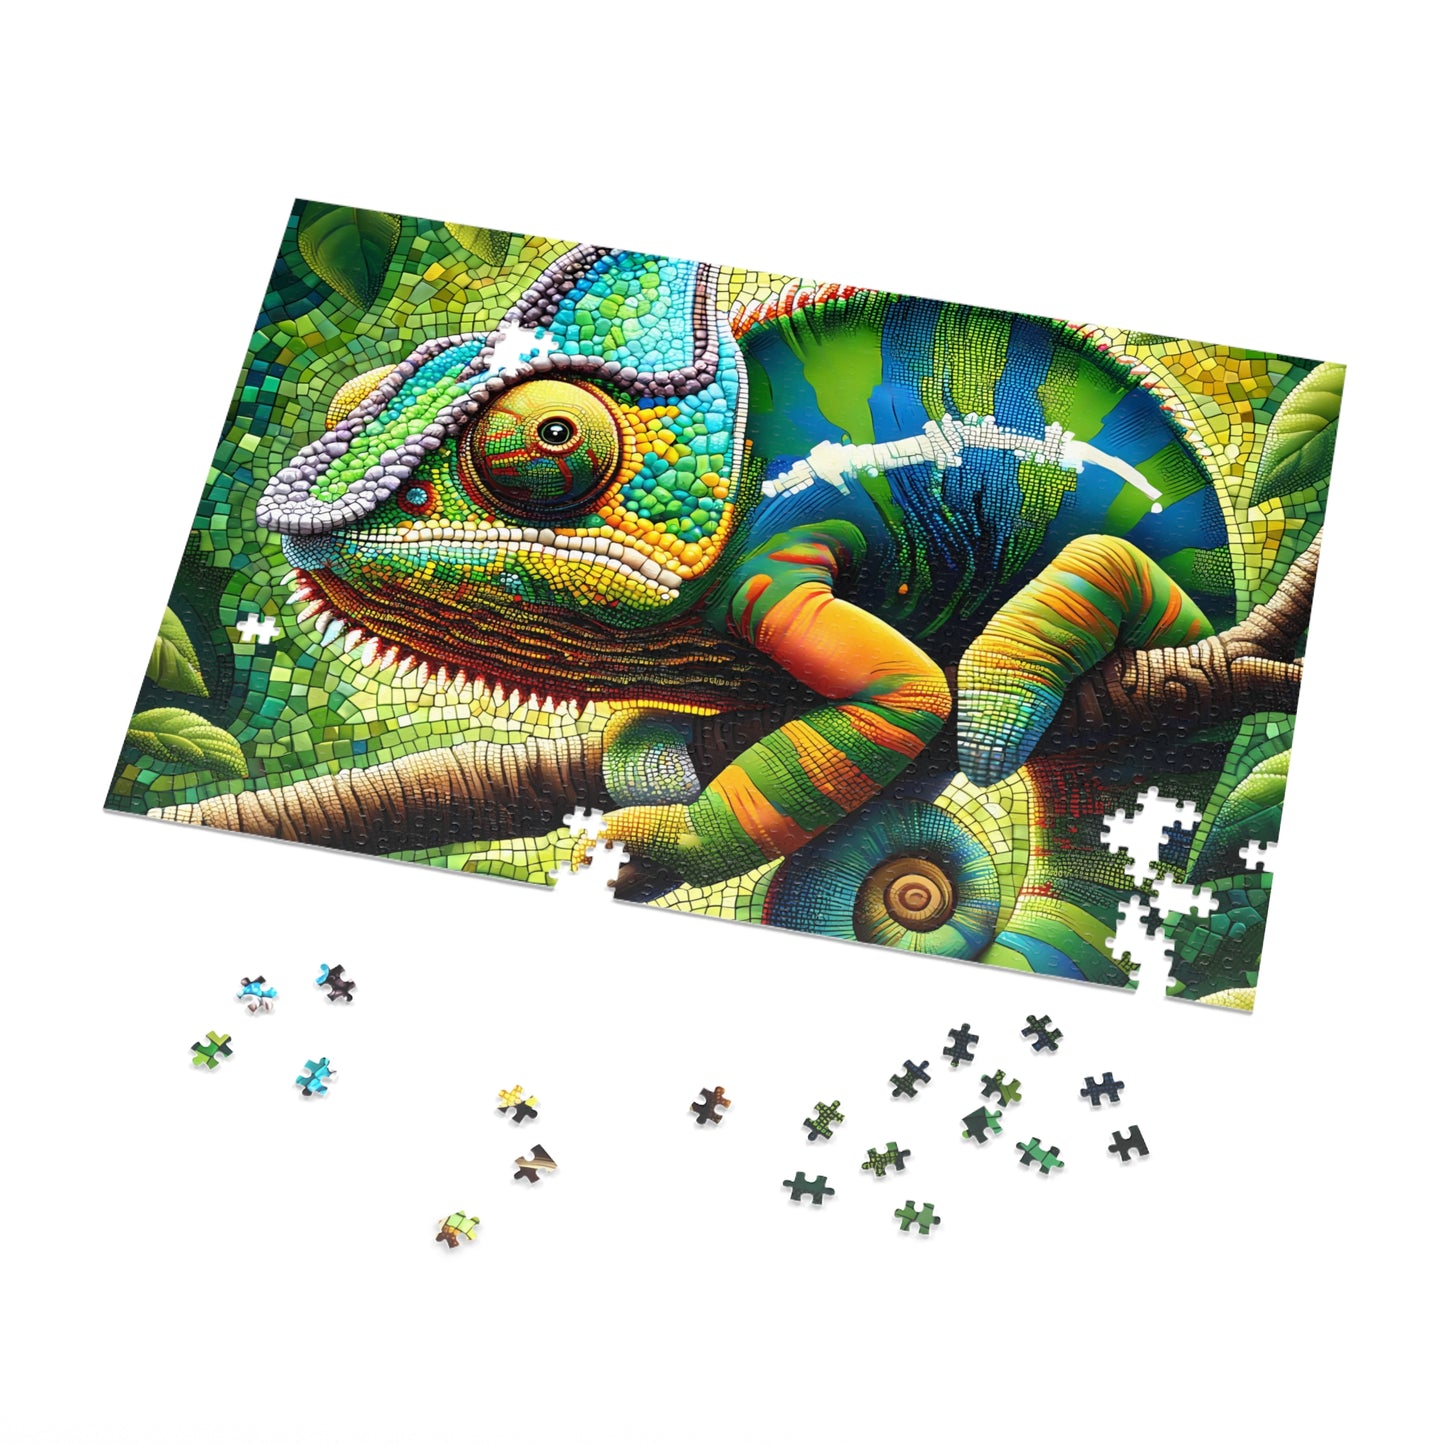 Chameleon, Puzzle,  Mosiac, Unique, Jigsaw, Family, Adults (110, 252, 500, 1000-Piece)